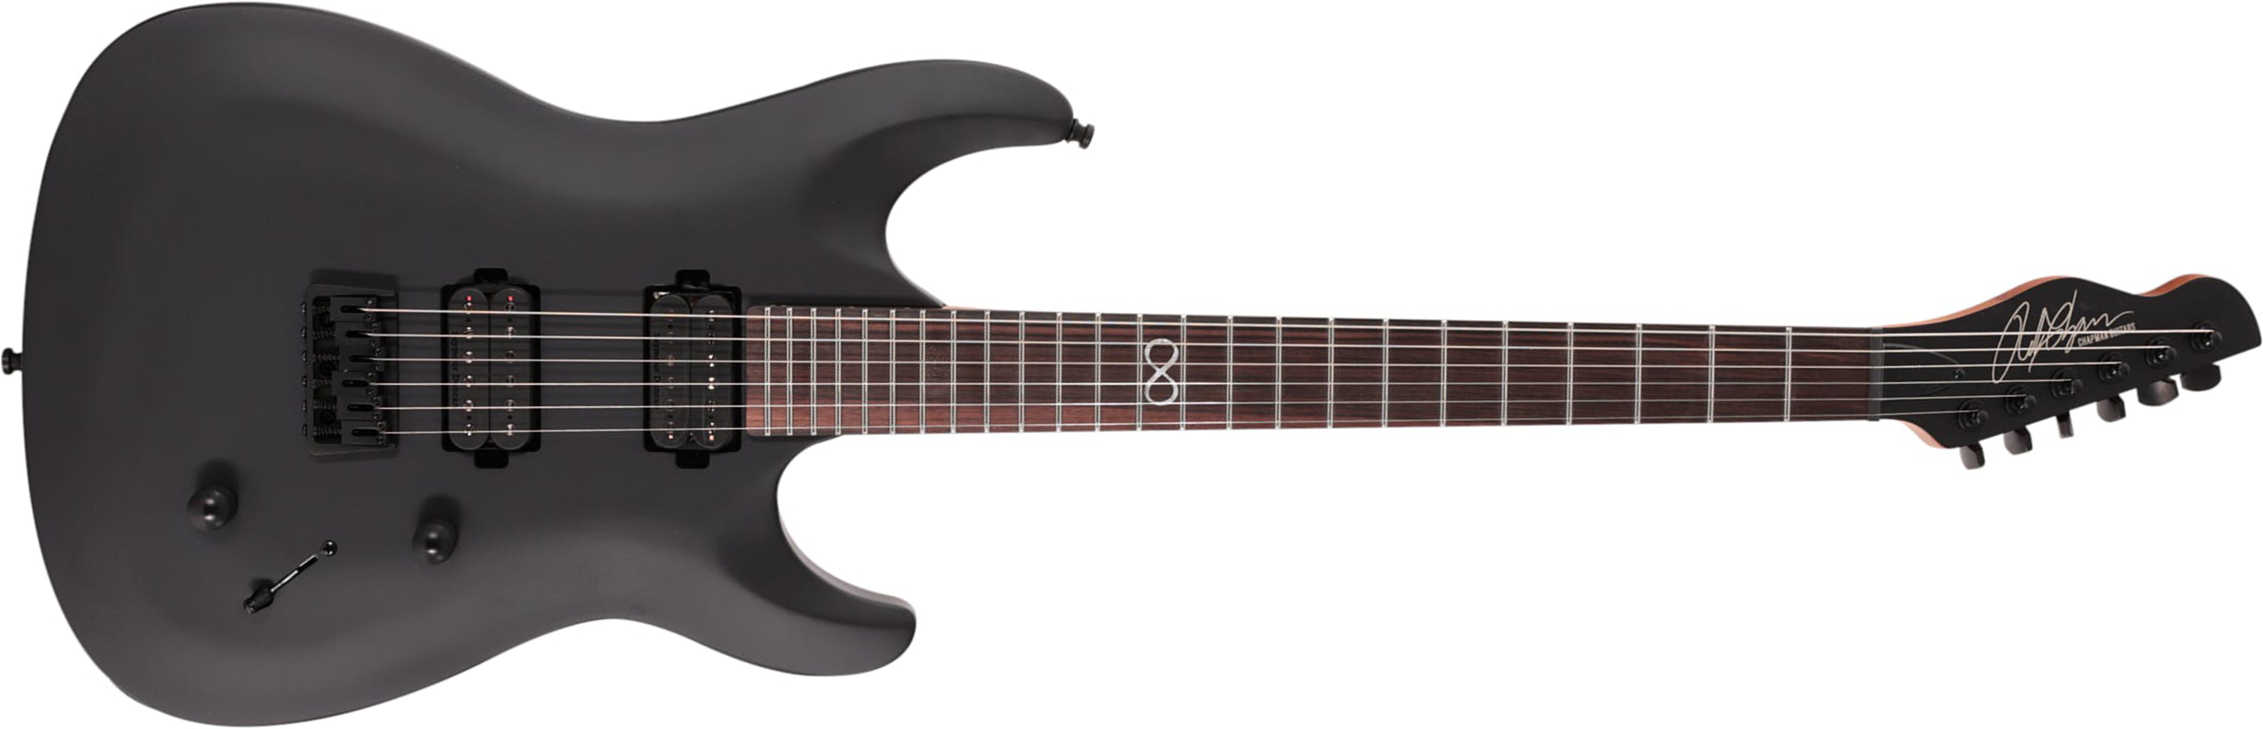 Chapman Guitars Ml1 Modern Pro 2h Seymour Duncan  Ht Eb - Cyber Black - Guitarra eléctrica con forma de str. - Main picture